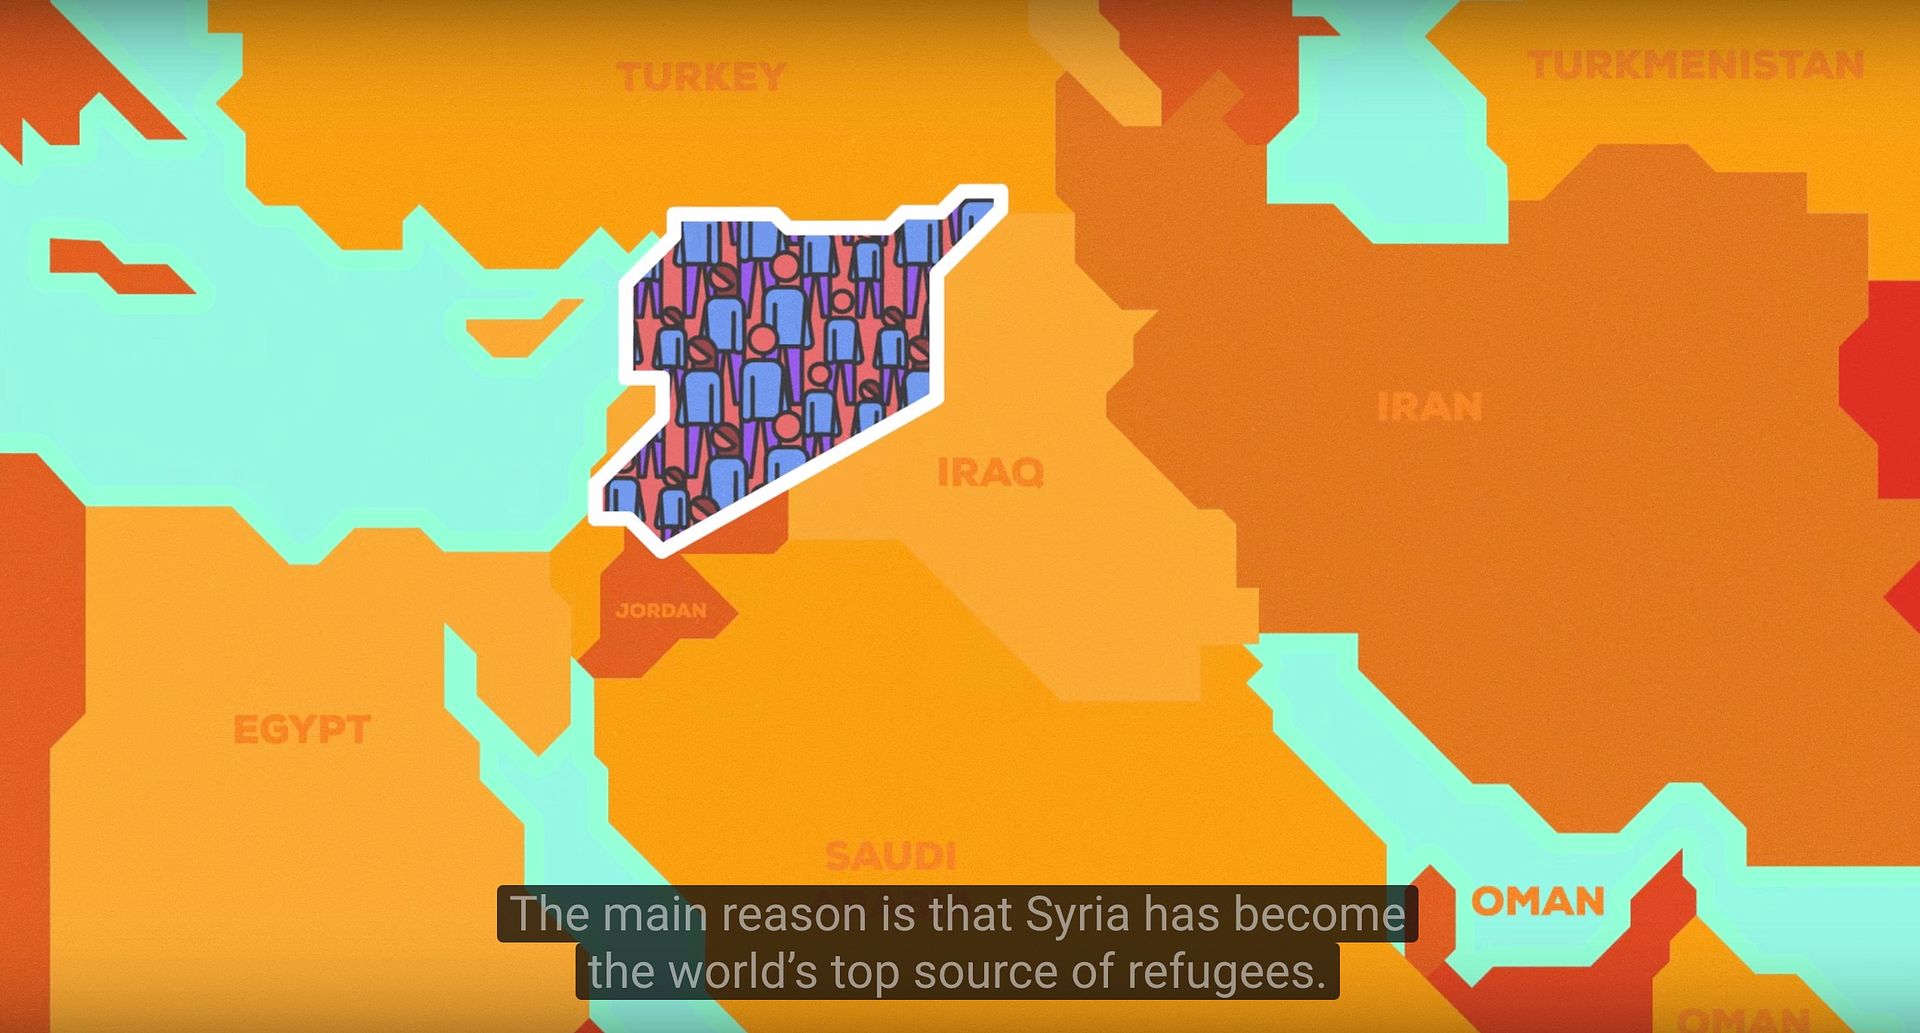 Great YouTube video explaining the Syrian refugee crisis